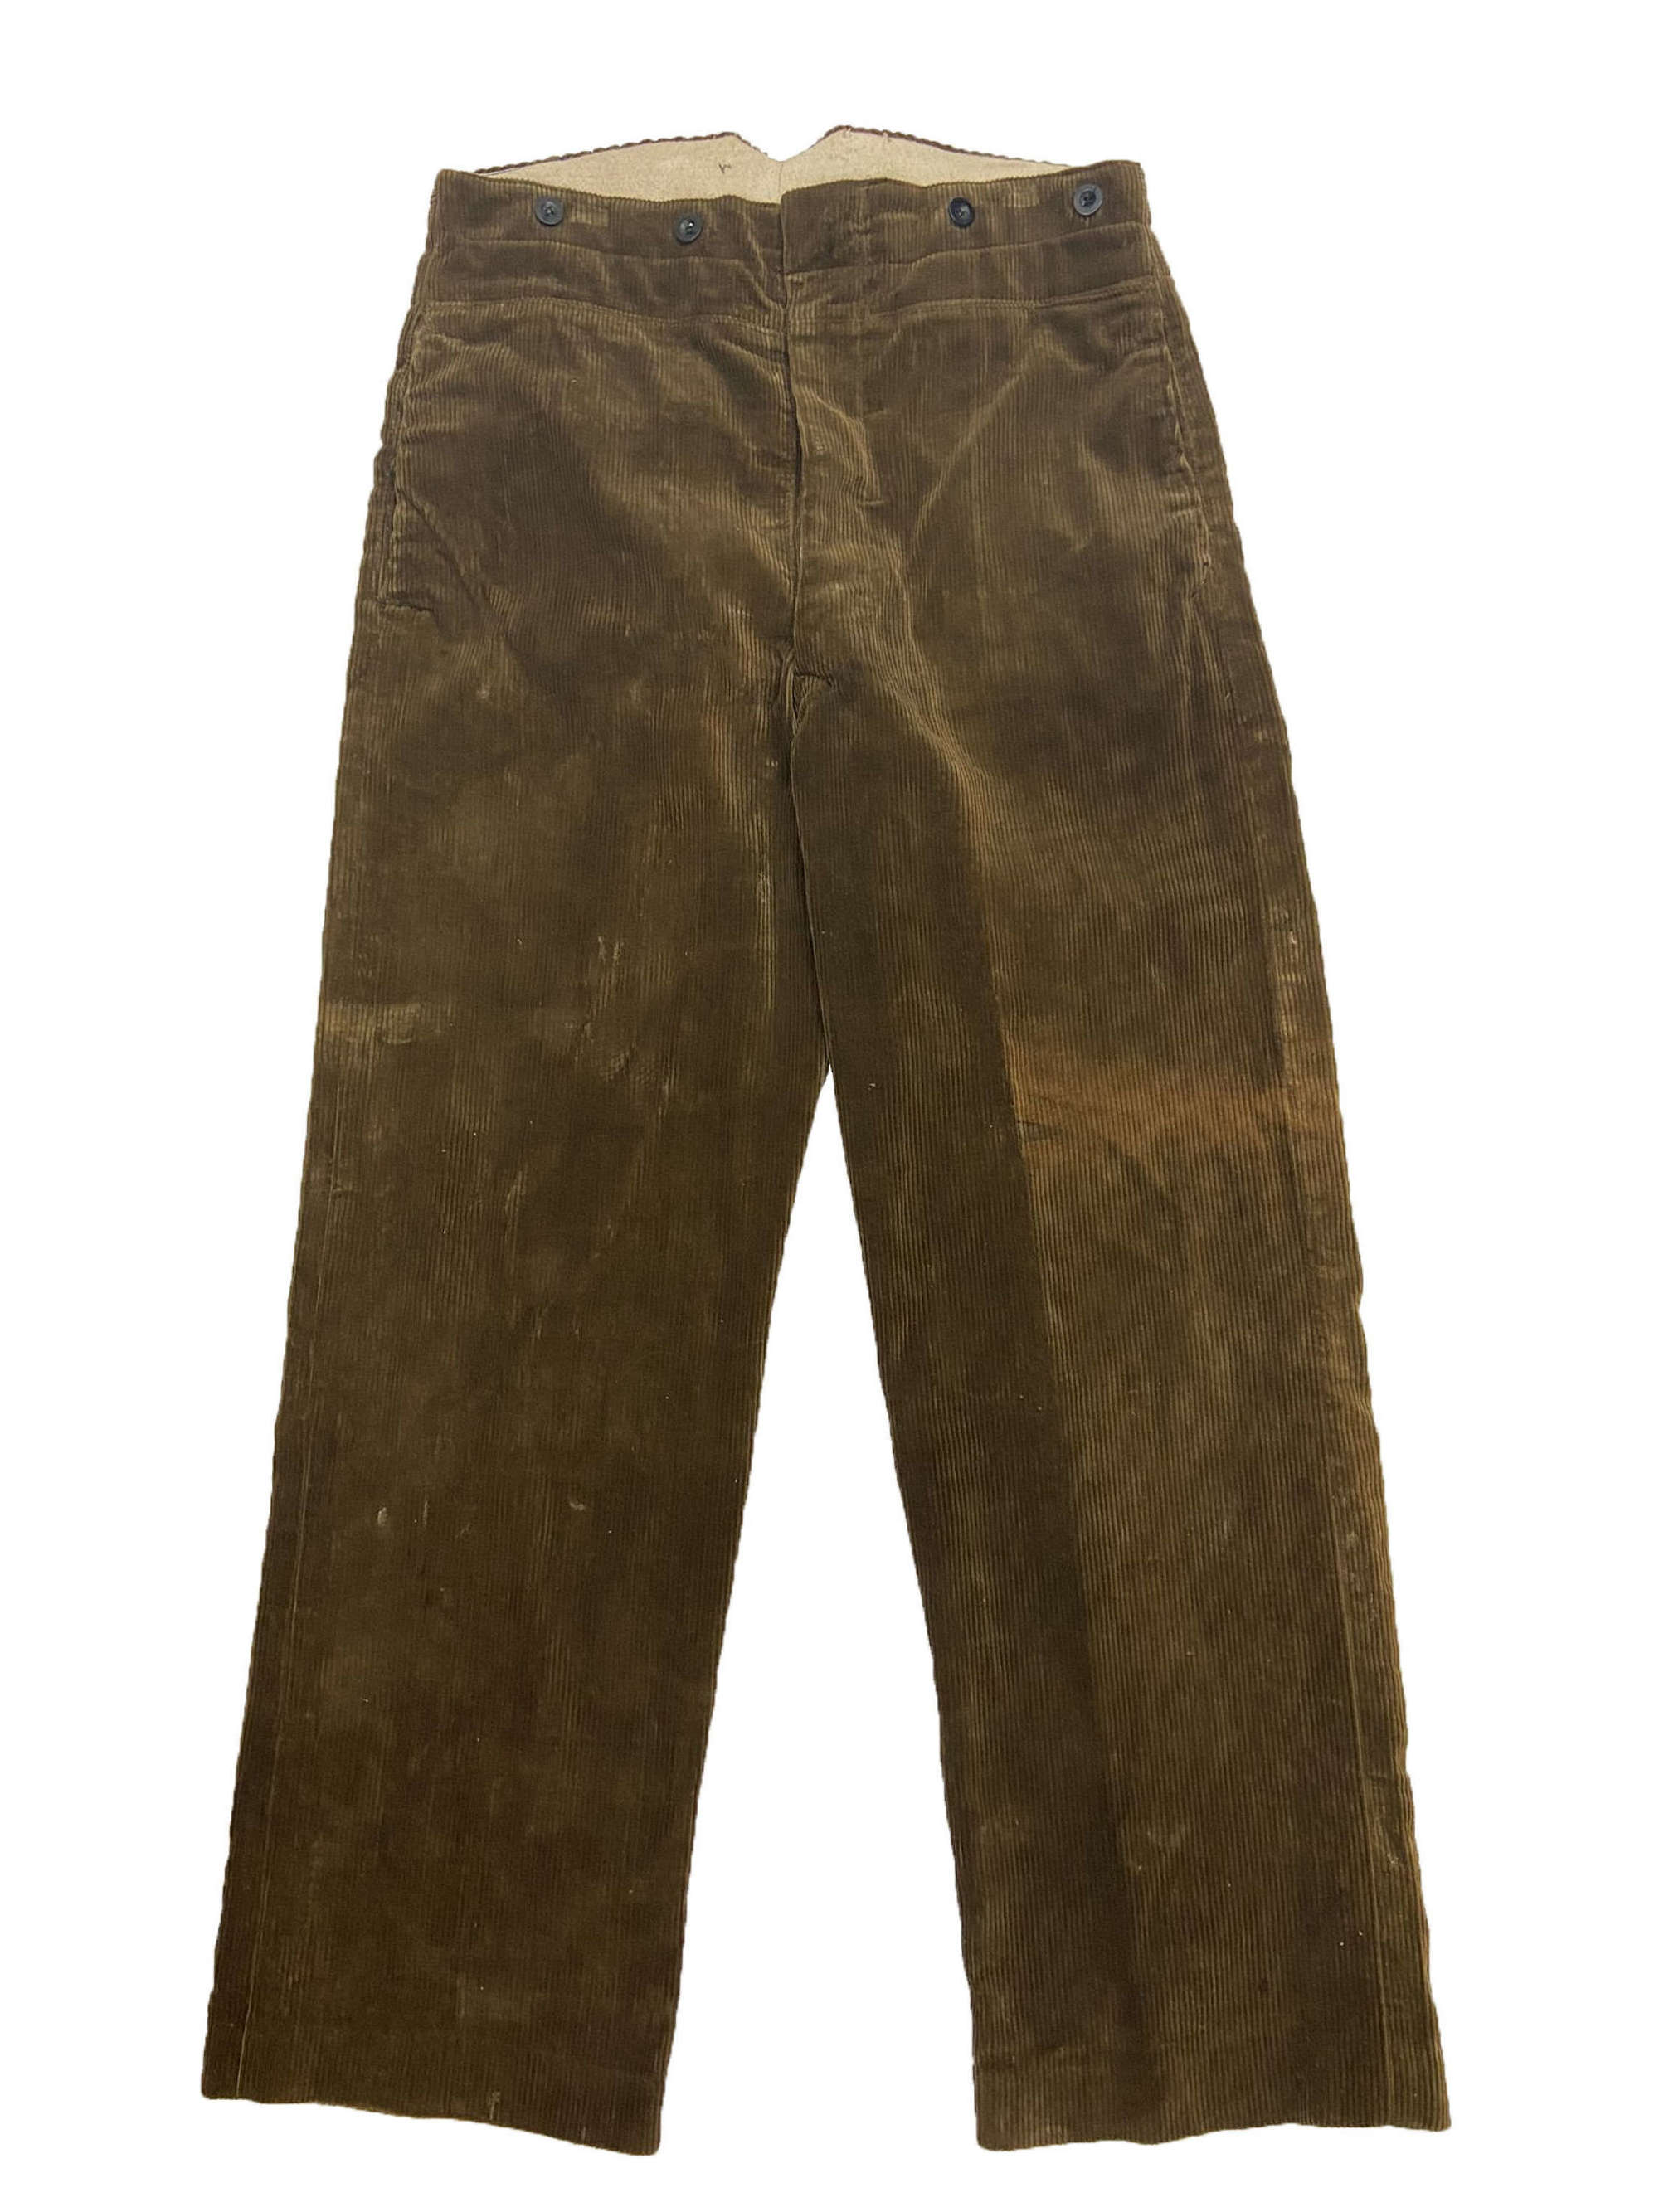 Rare Original 1940s CC41 Men's Brown Corduroy Trousers